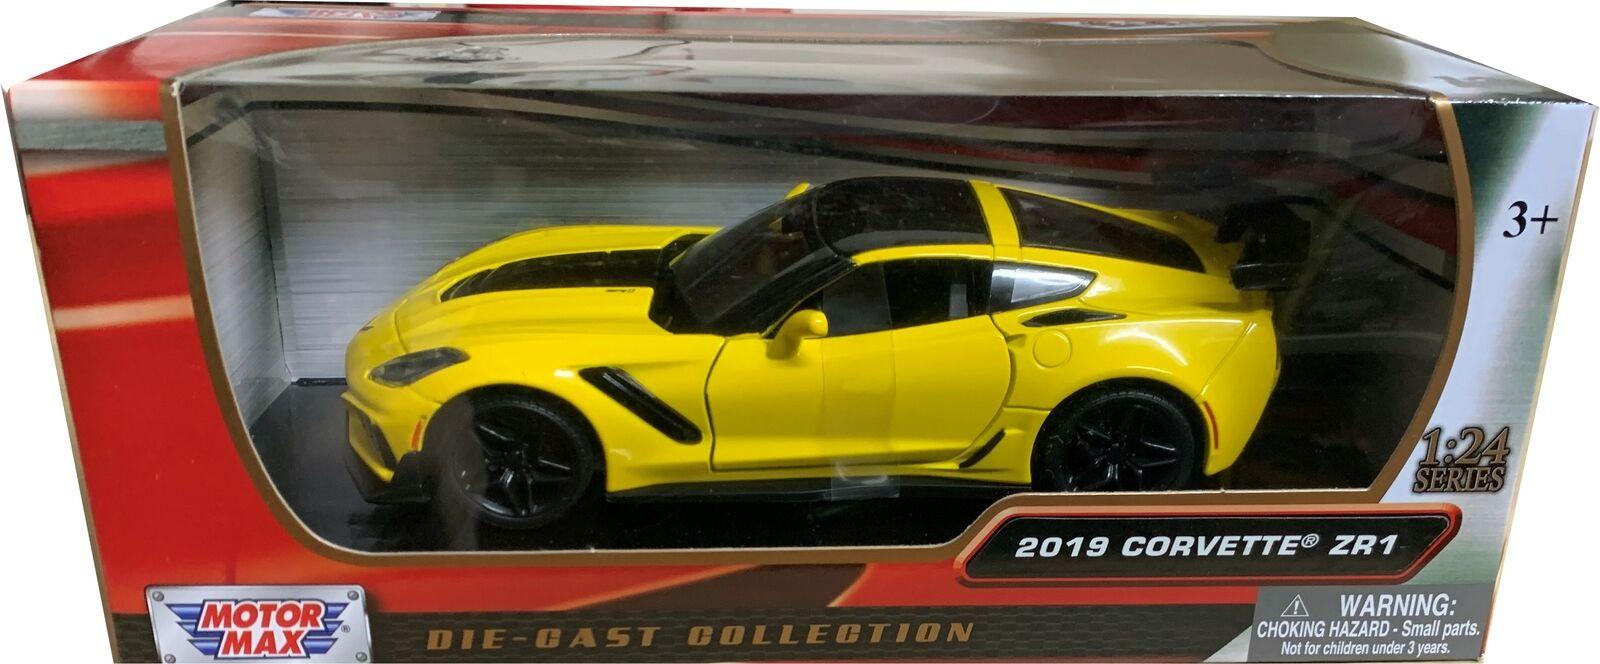 Chevrolet Corvette ZR1 2019 in yellow 1:24 scale model from motormax